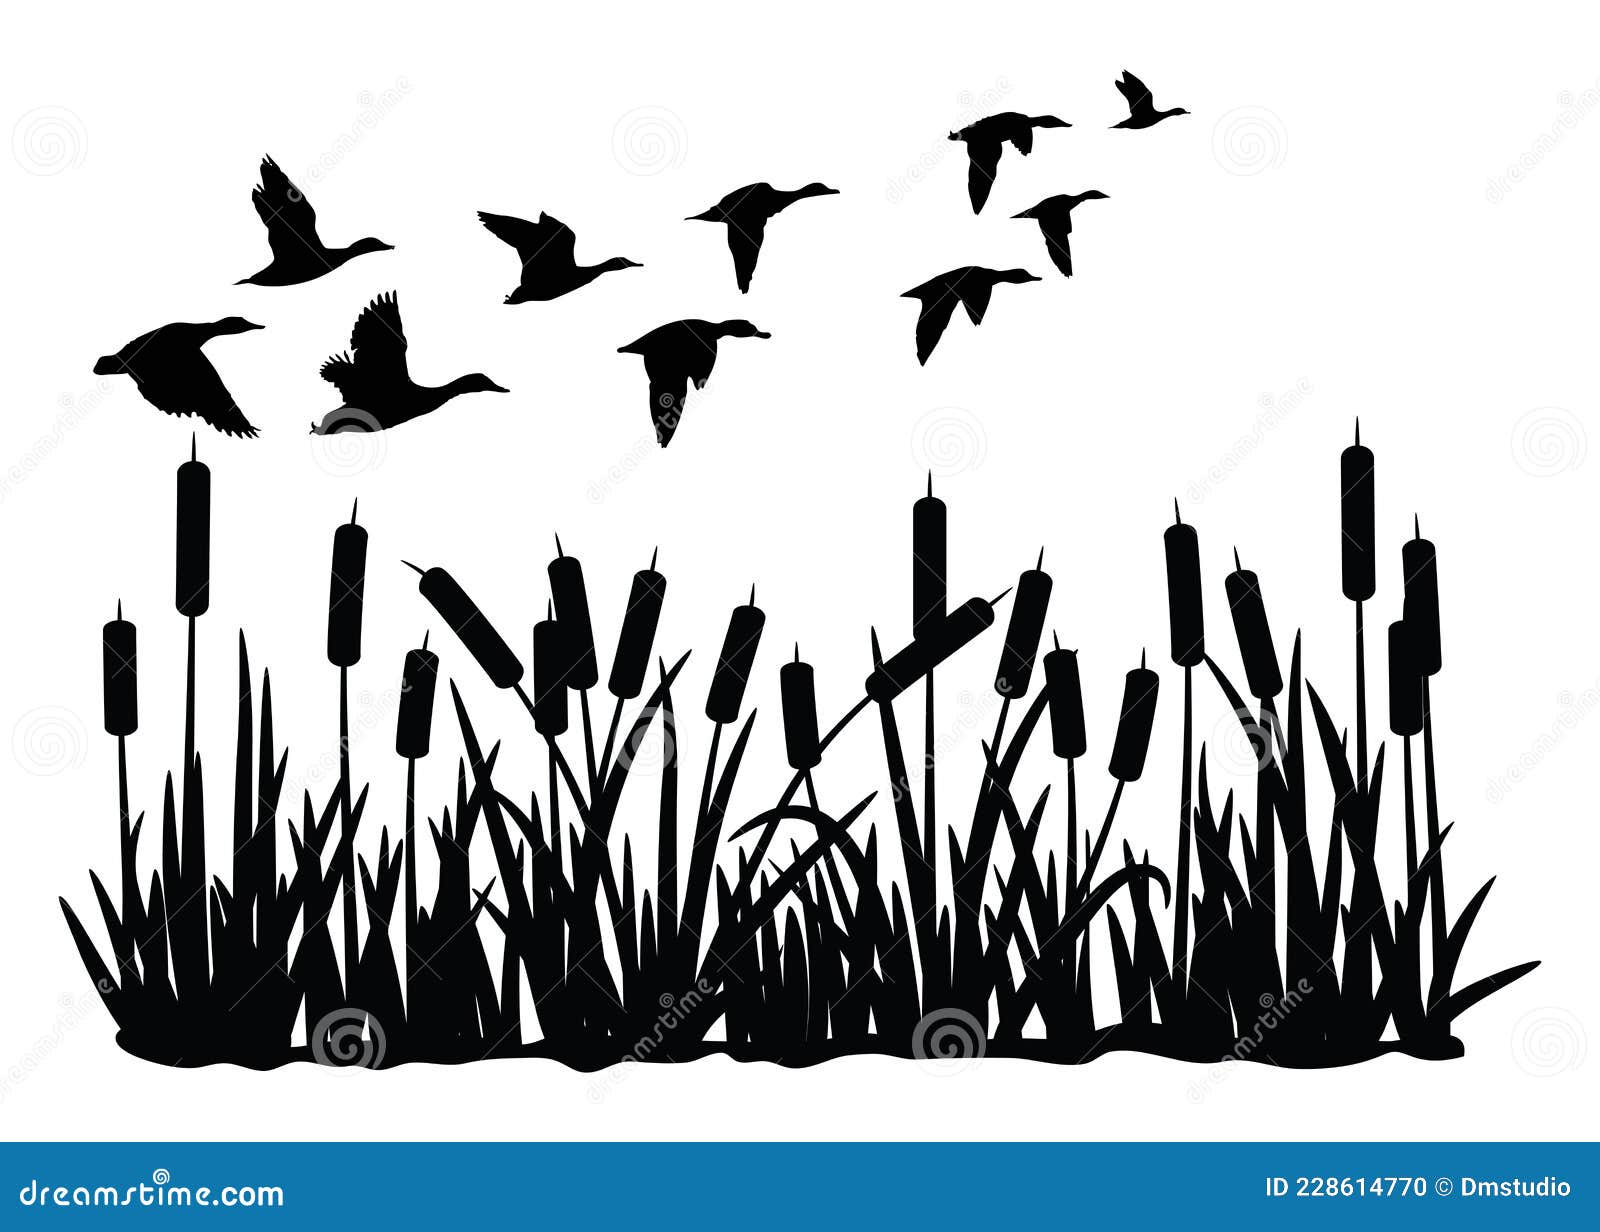  silhouette of duck bird flock flight over marsh herbs  on white background. group of wild ducks and typhaceae marsh